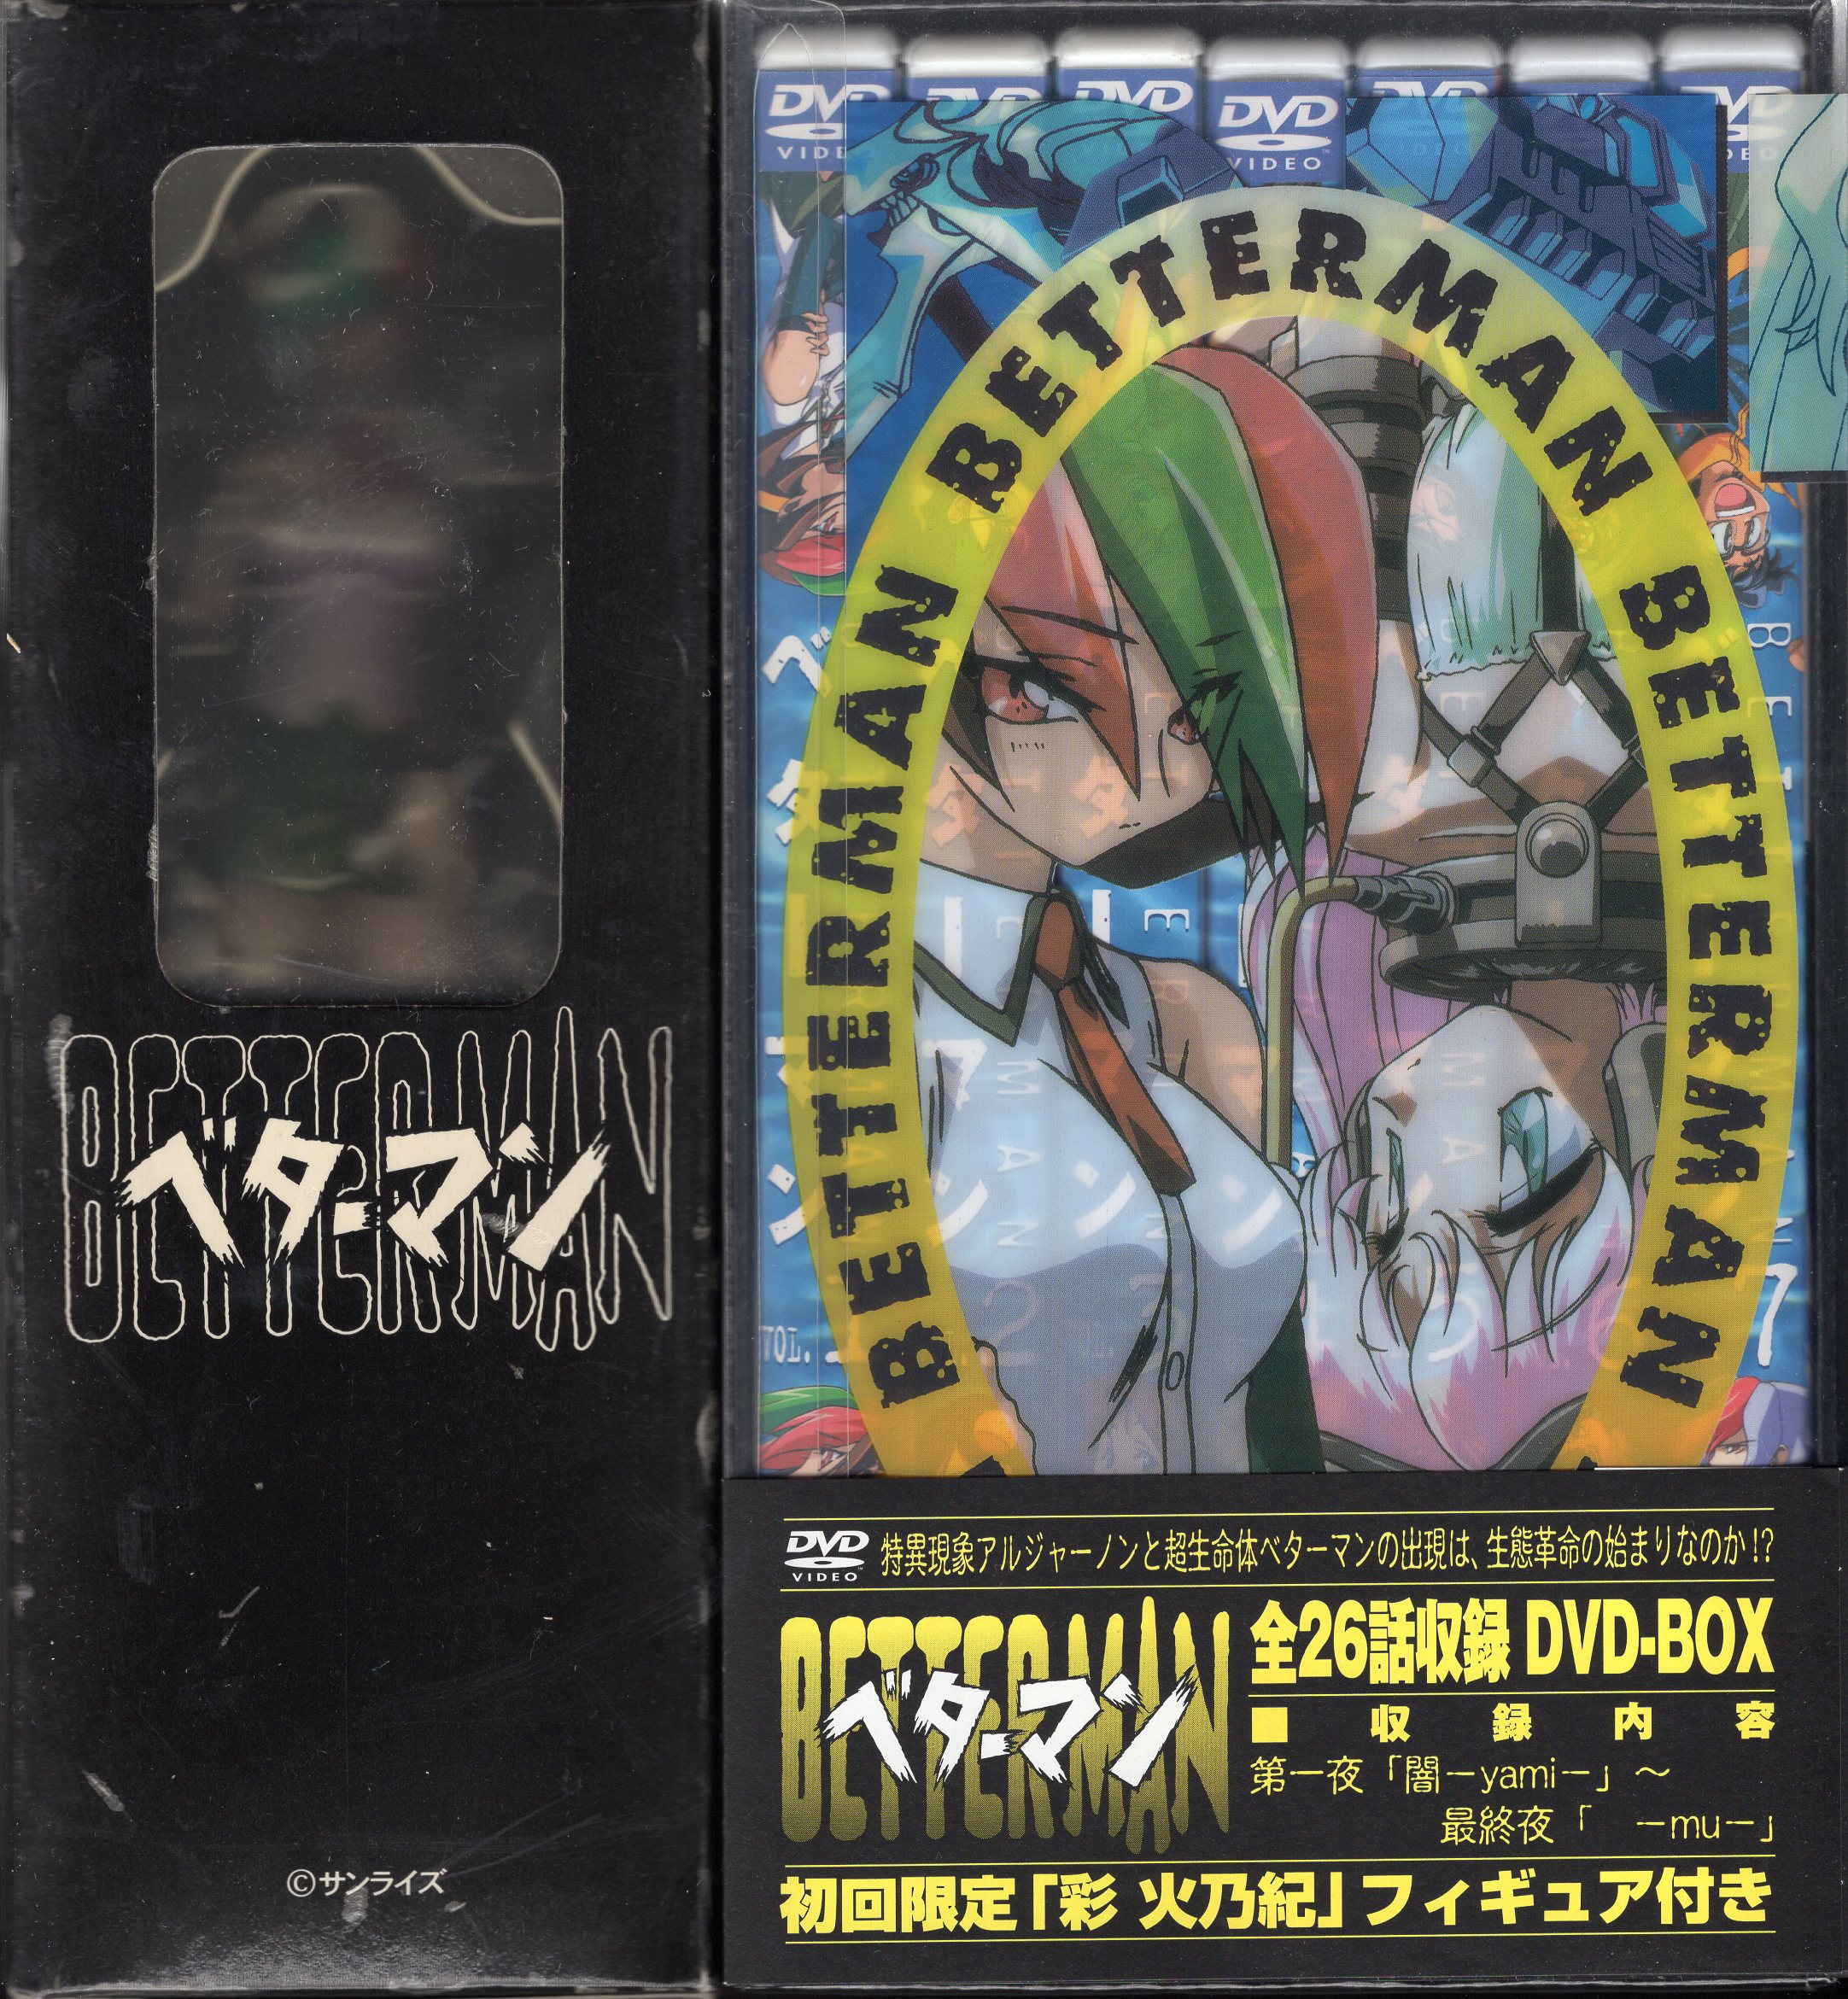 Betterman 20th Anniversary Blu-ray BOX Fully Limited Edition Blu-ray (Japan)